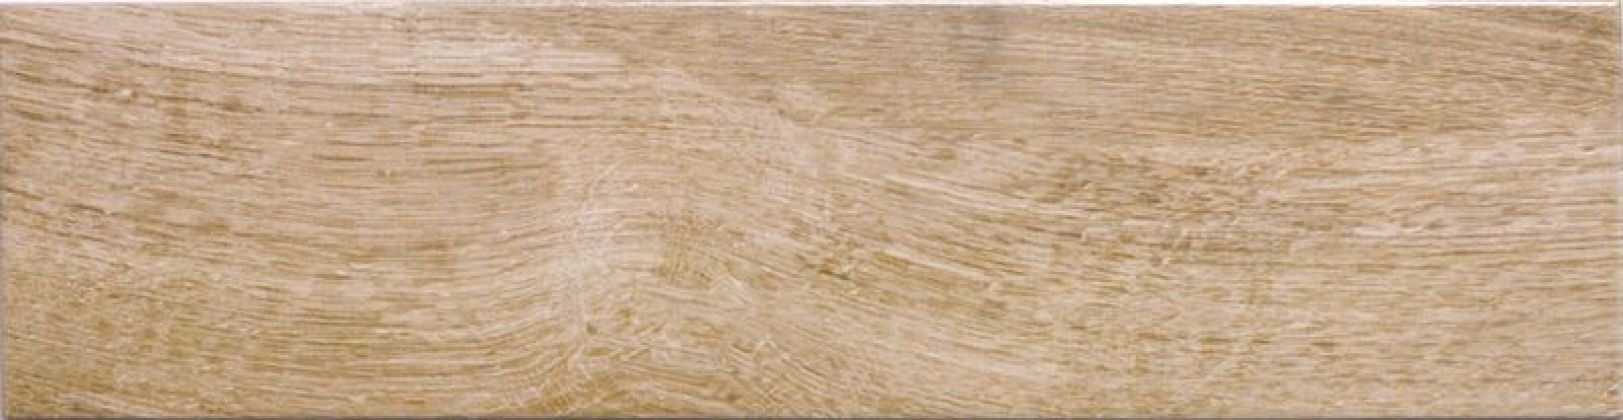 Плитка Wood Distinct 15x60